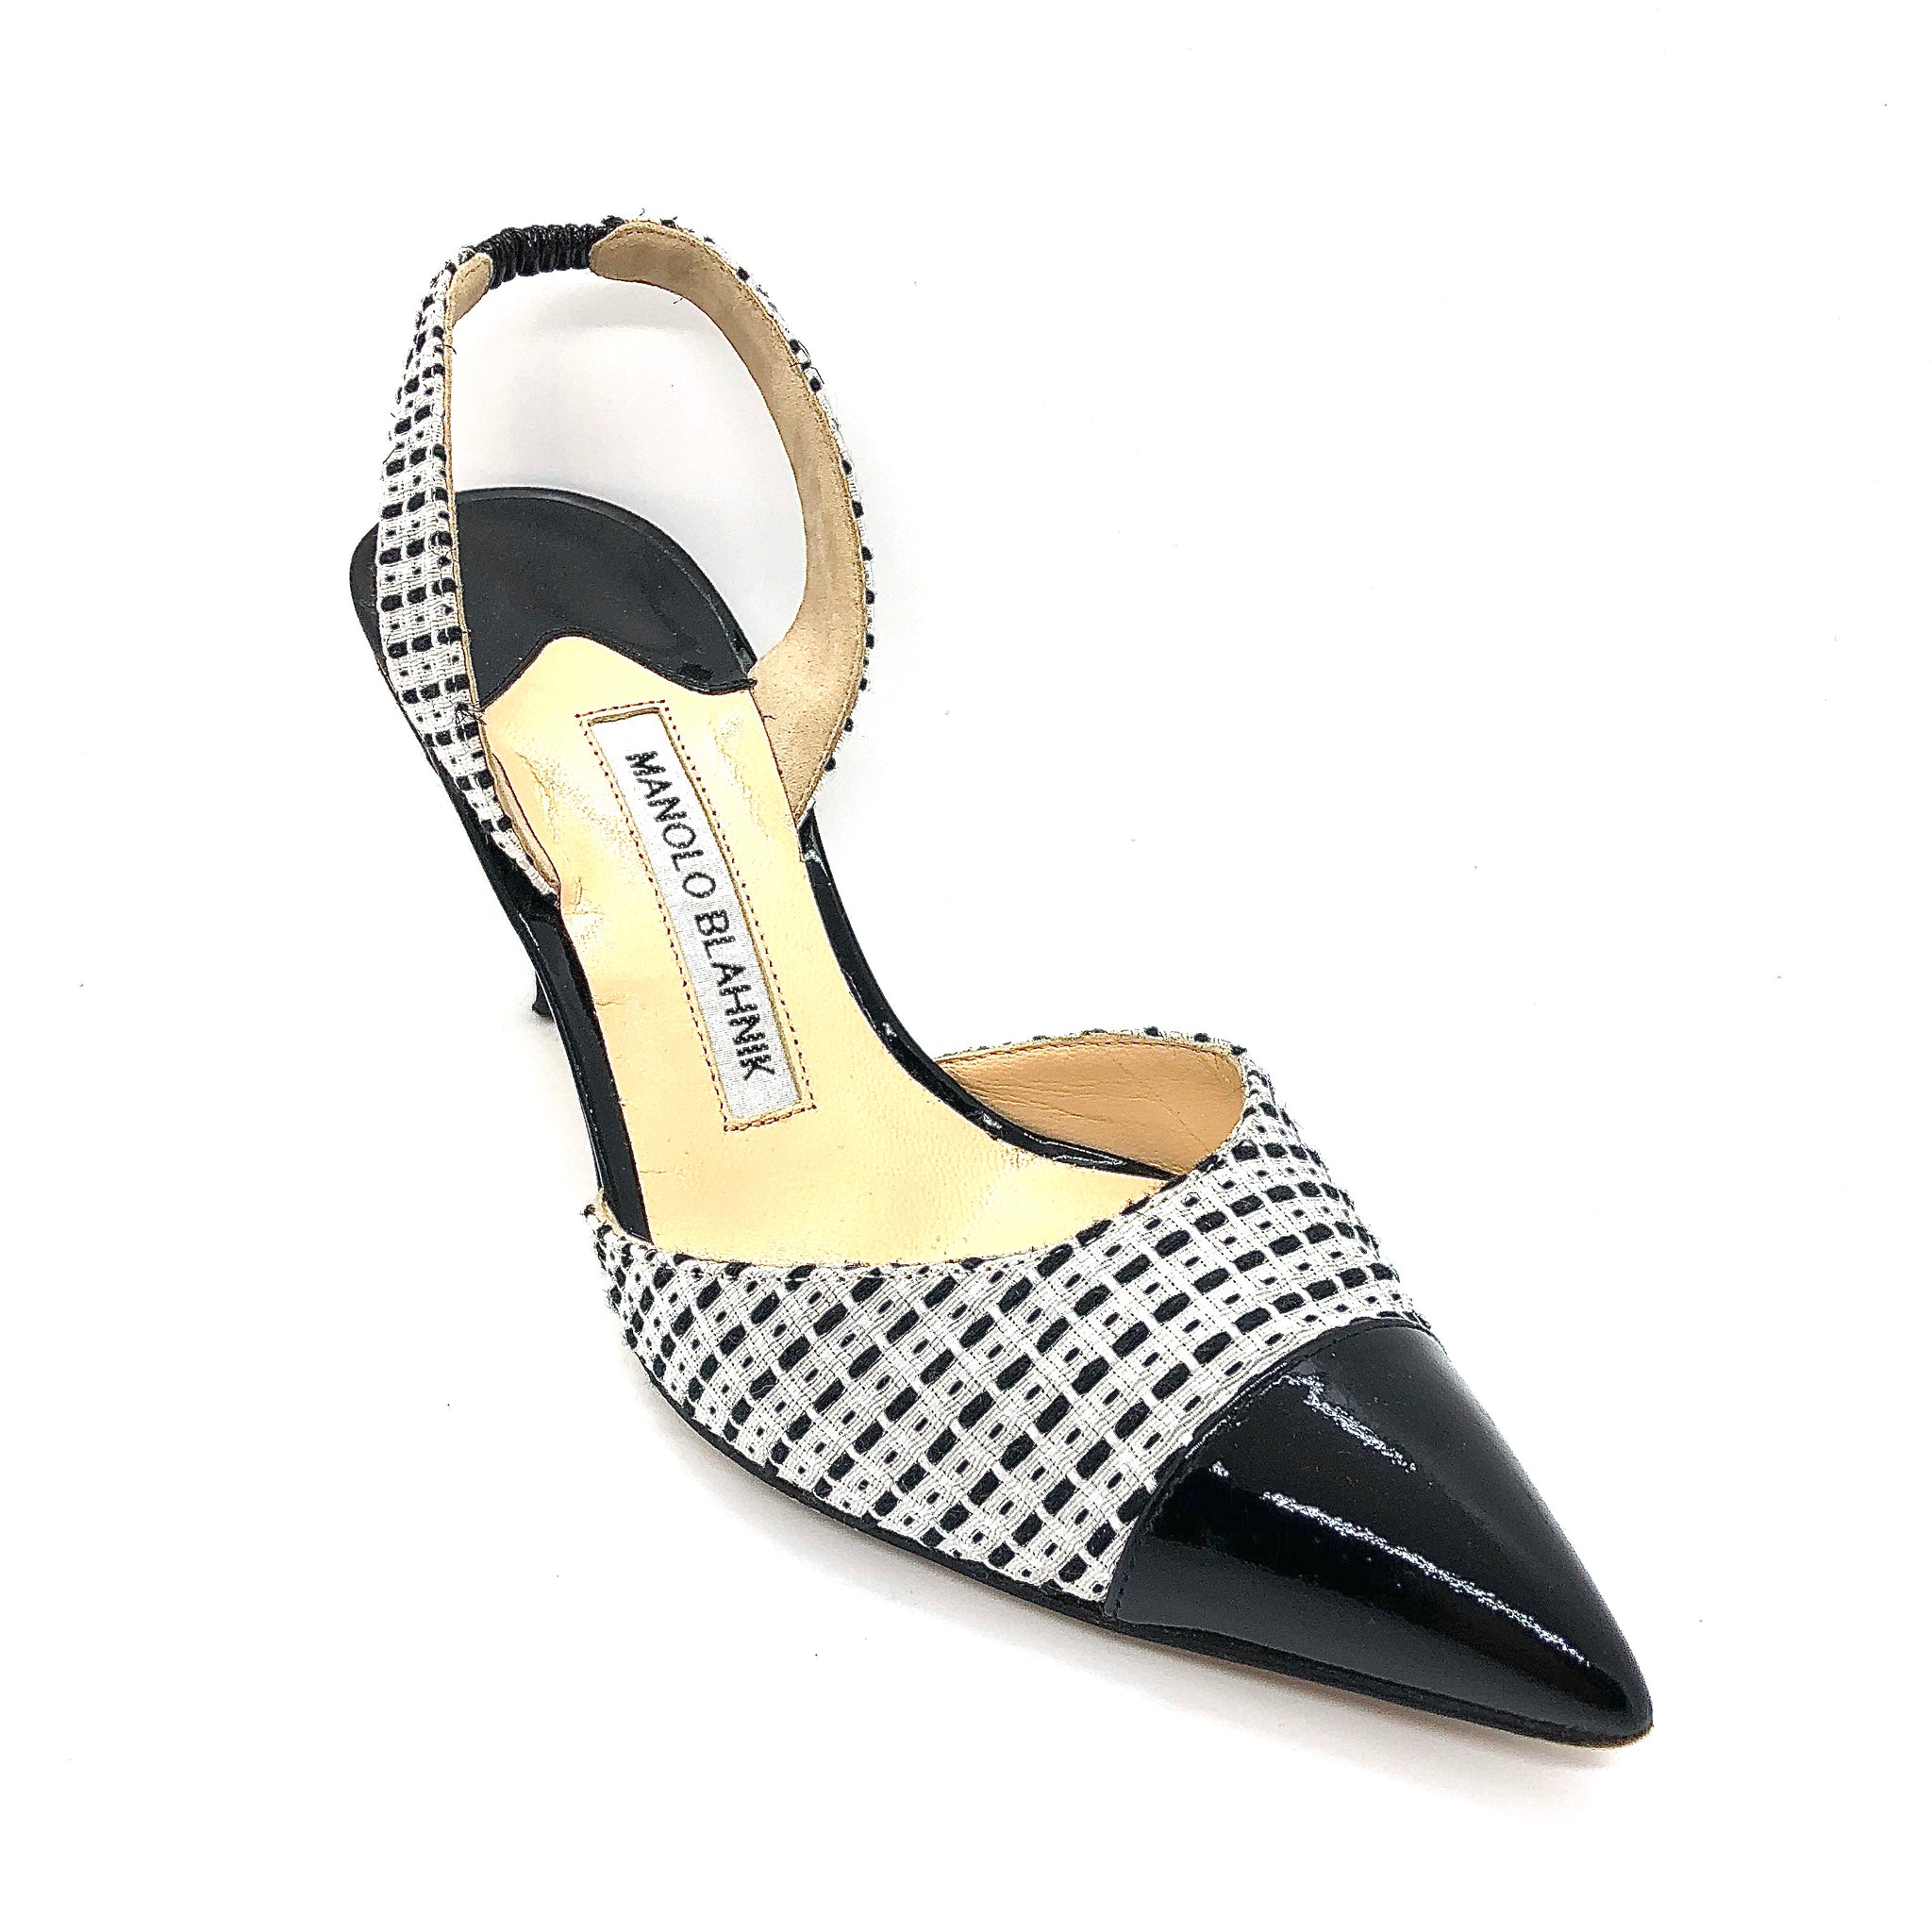 Manolo Blahnik Black and White Size 36 3" Women's Shoes